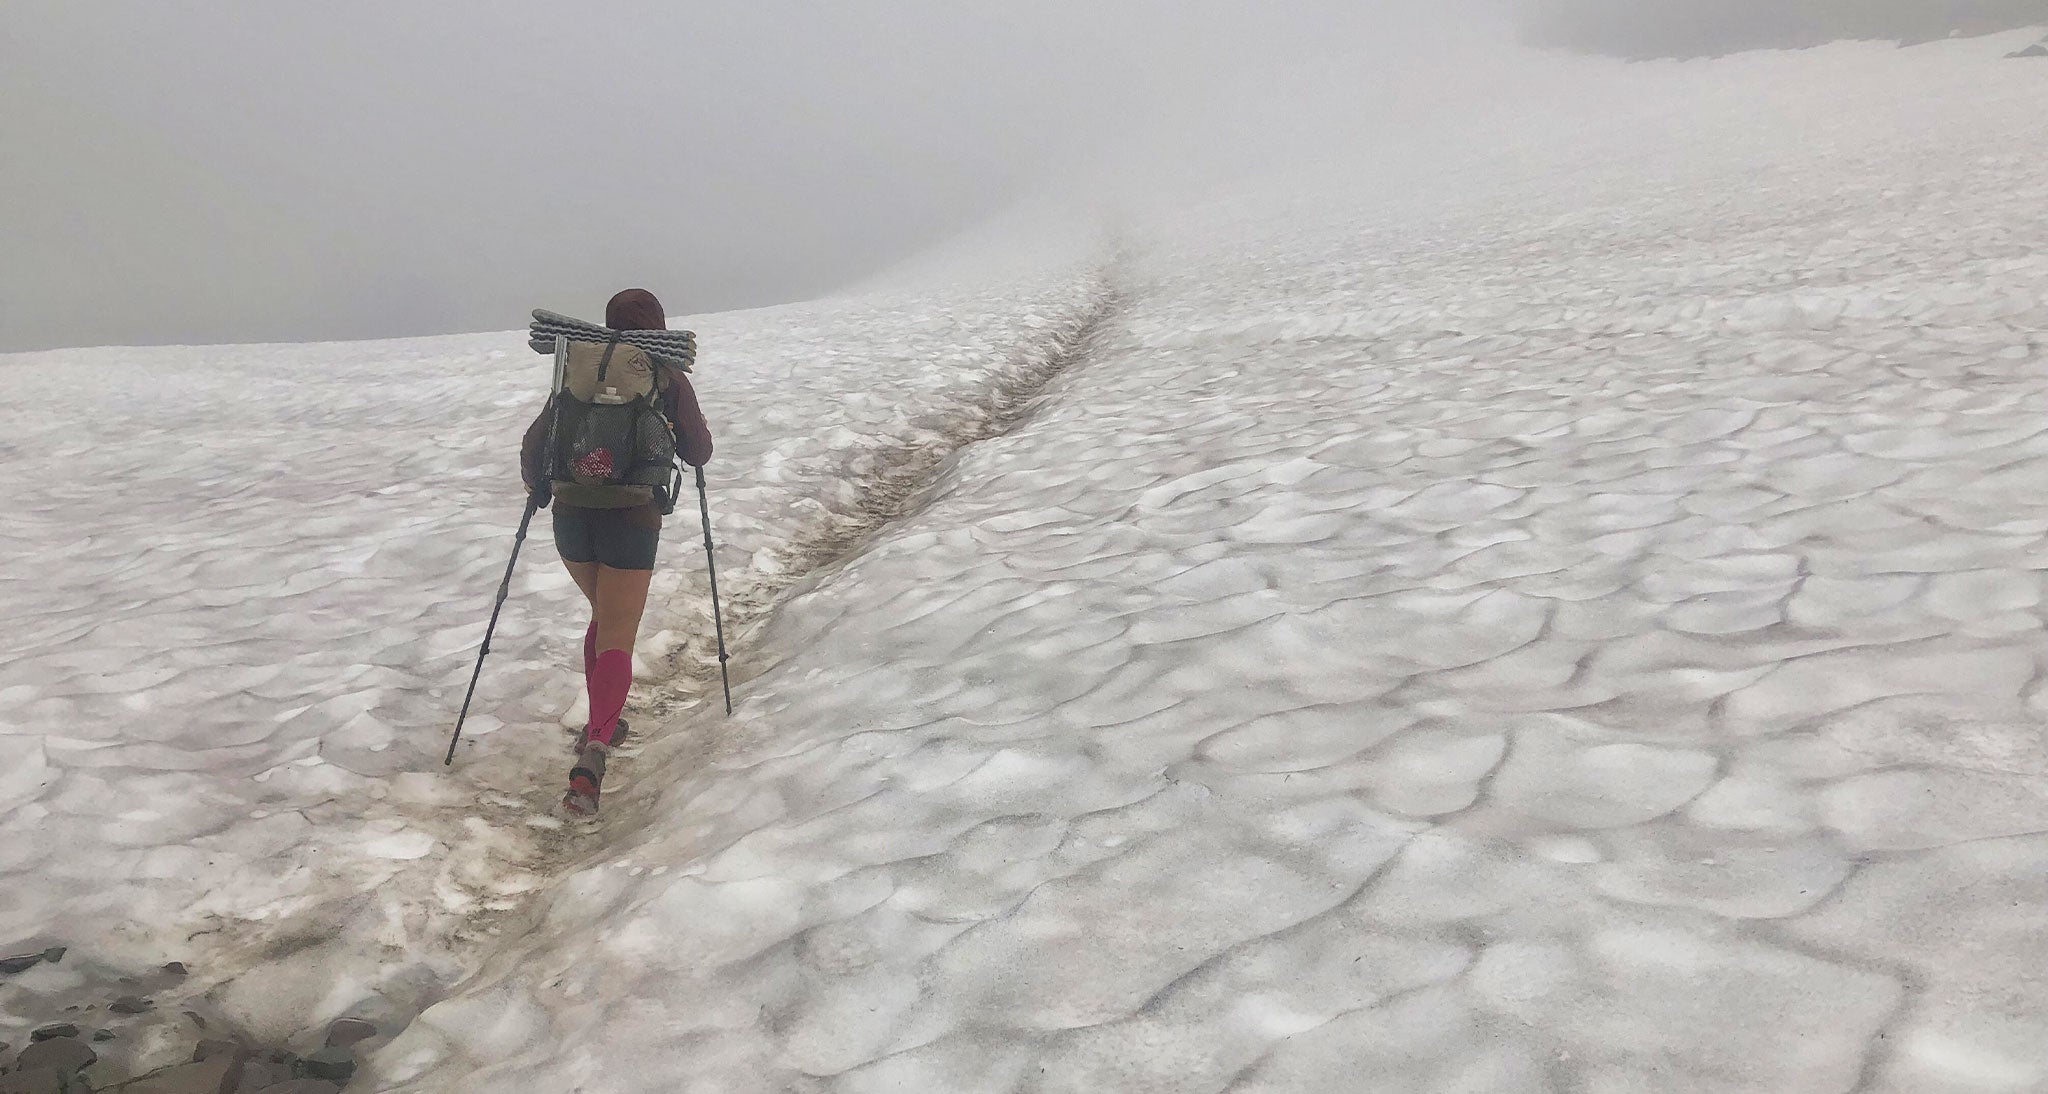 Ultralight thru hiker hikes through snow